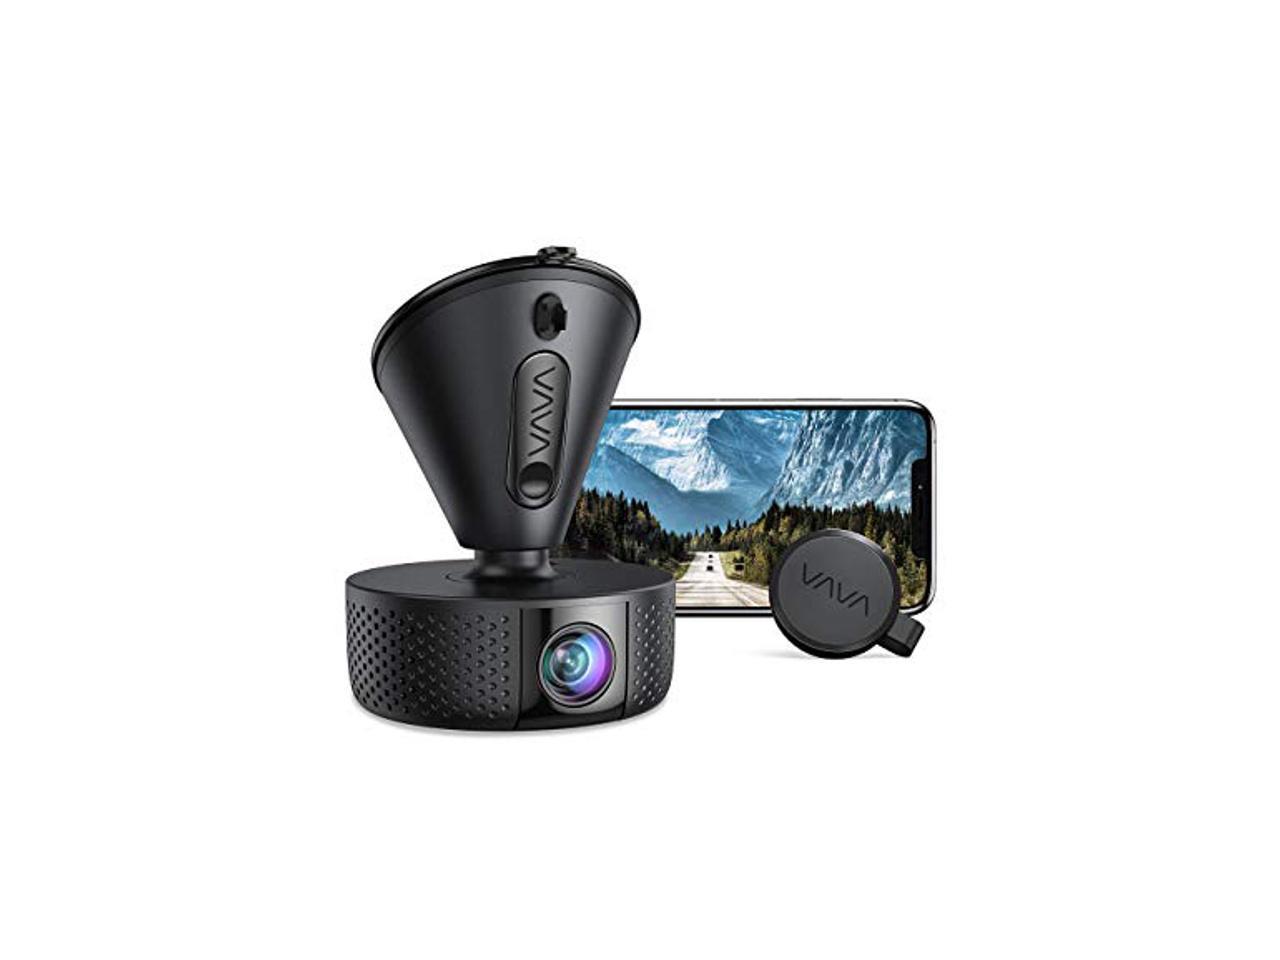 3840X2140@30Fps Wi-Fi Car Dash Camera with Sony Night Vision Sensor VAV 4K Dash Cam Loop Recording G-Sensor Dashboard Camera Recorder with Parking Mode 